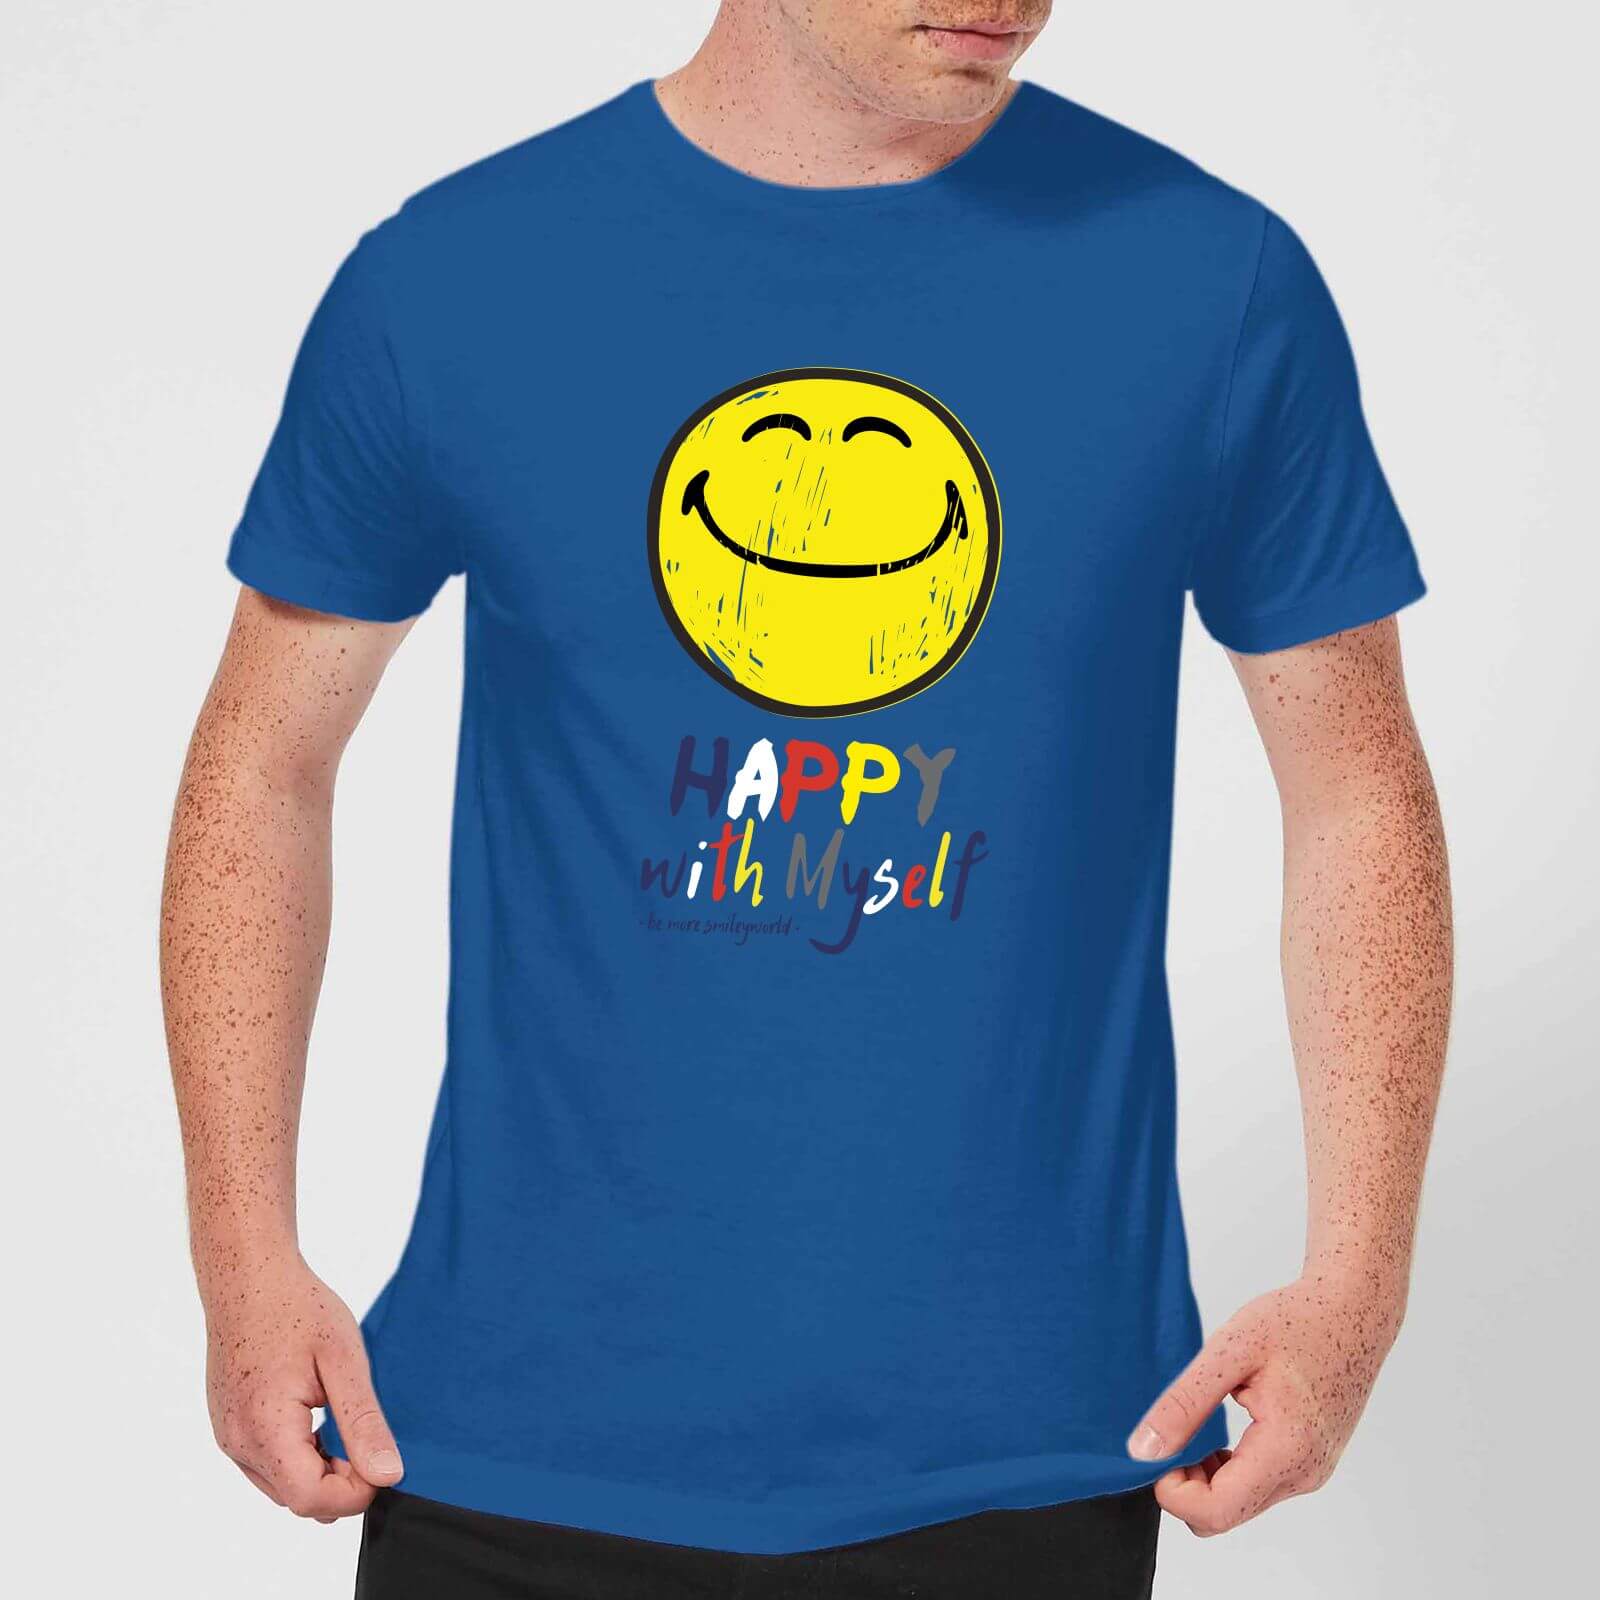 Happy With Myself Men's T-Shirt - Royal Blue - S - royal blue